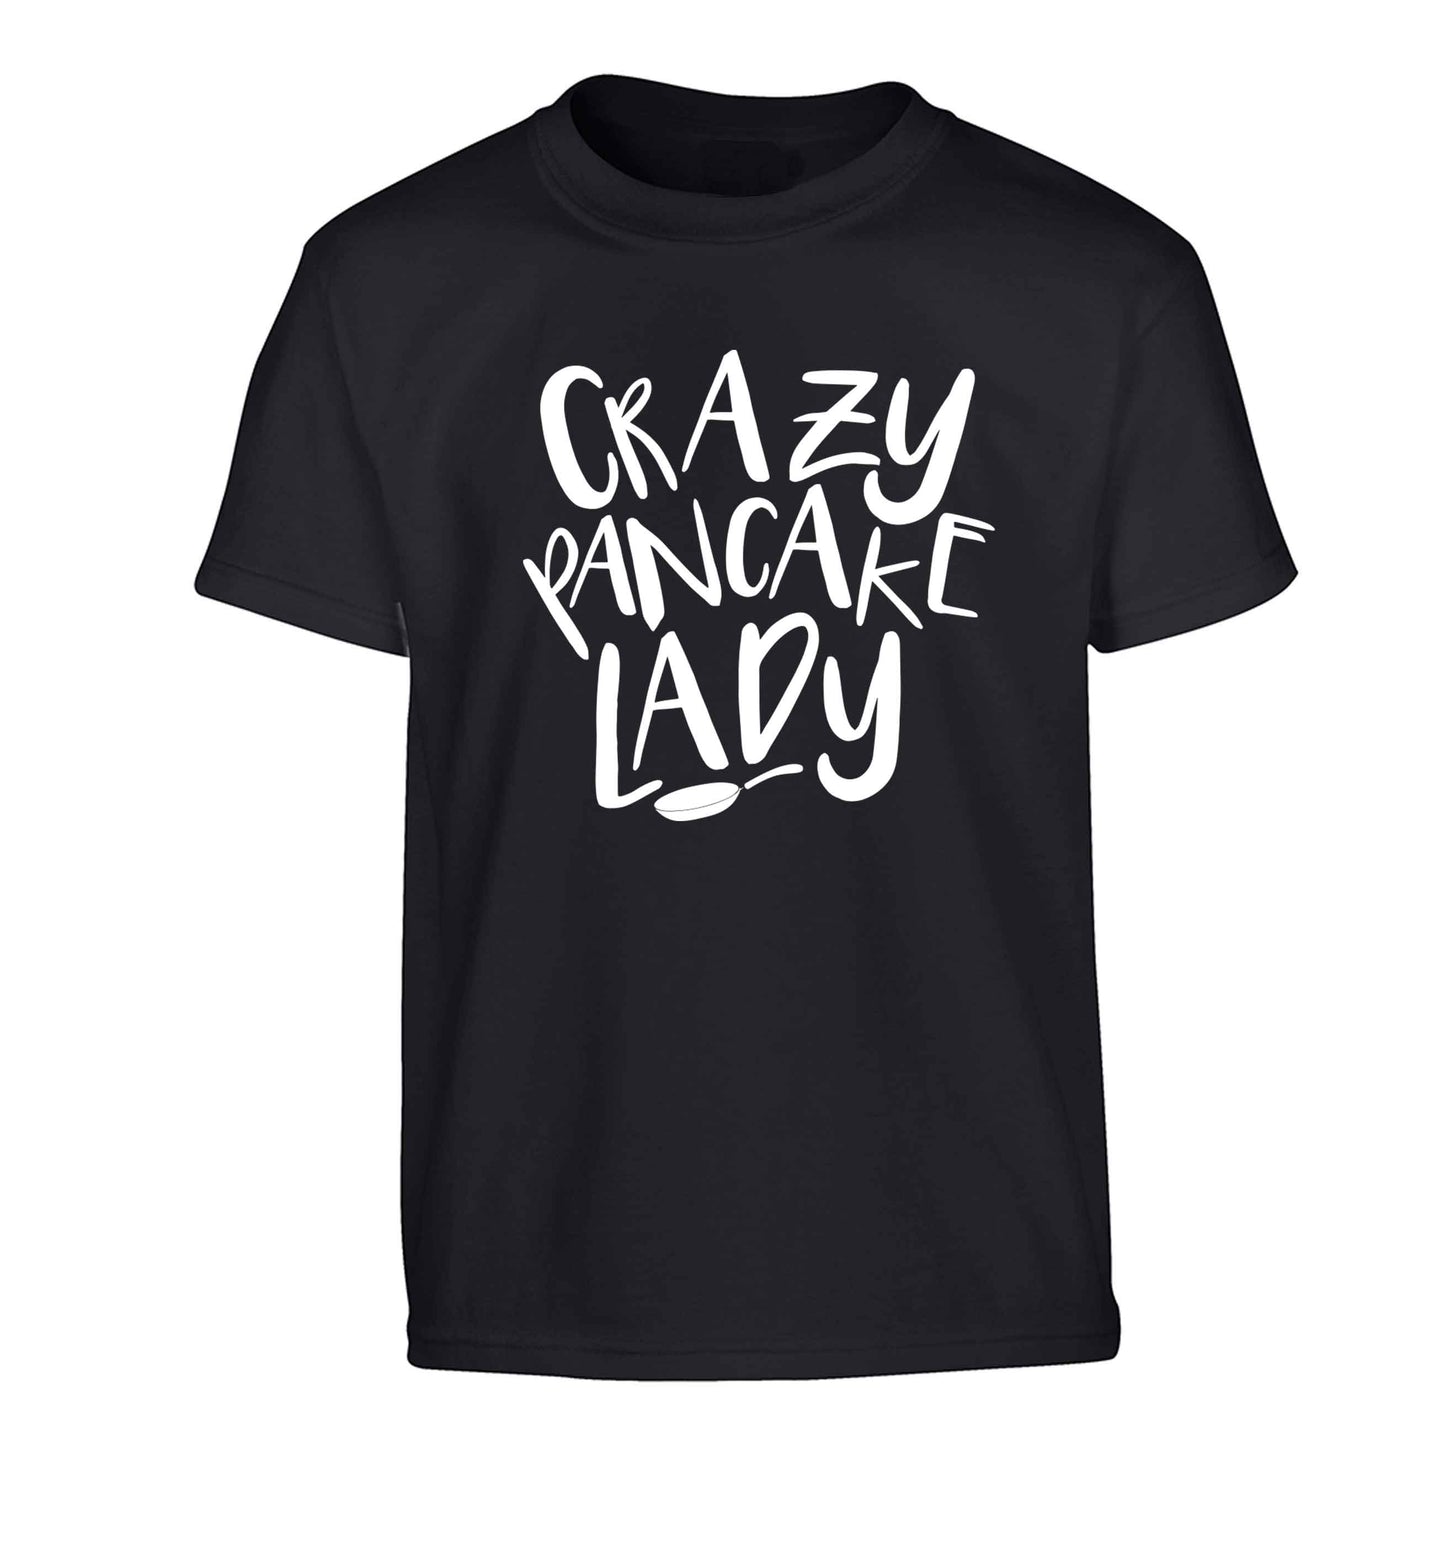 Crazy pancake lady Children's black Tshirt 12-13 Years